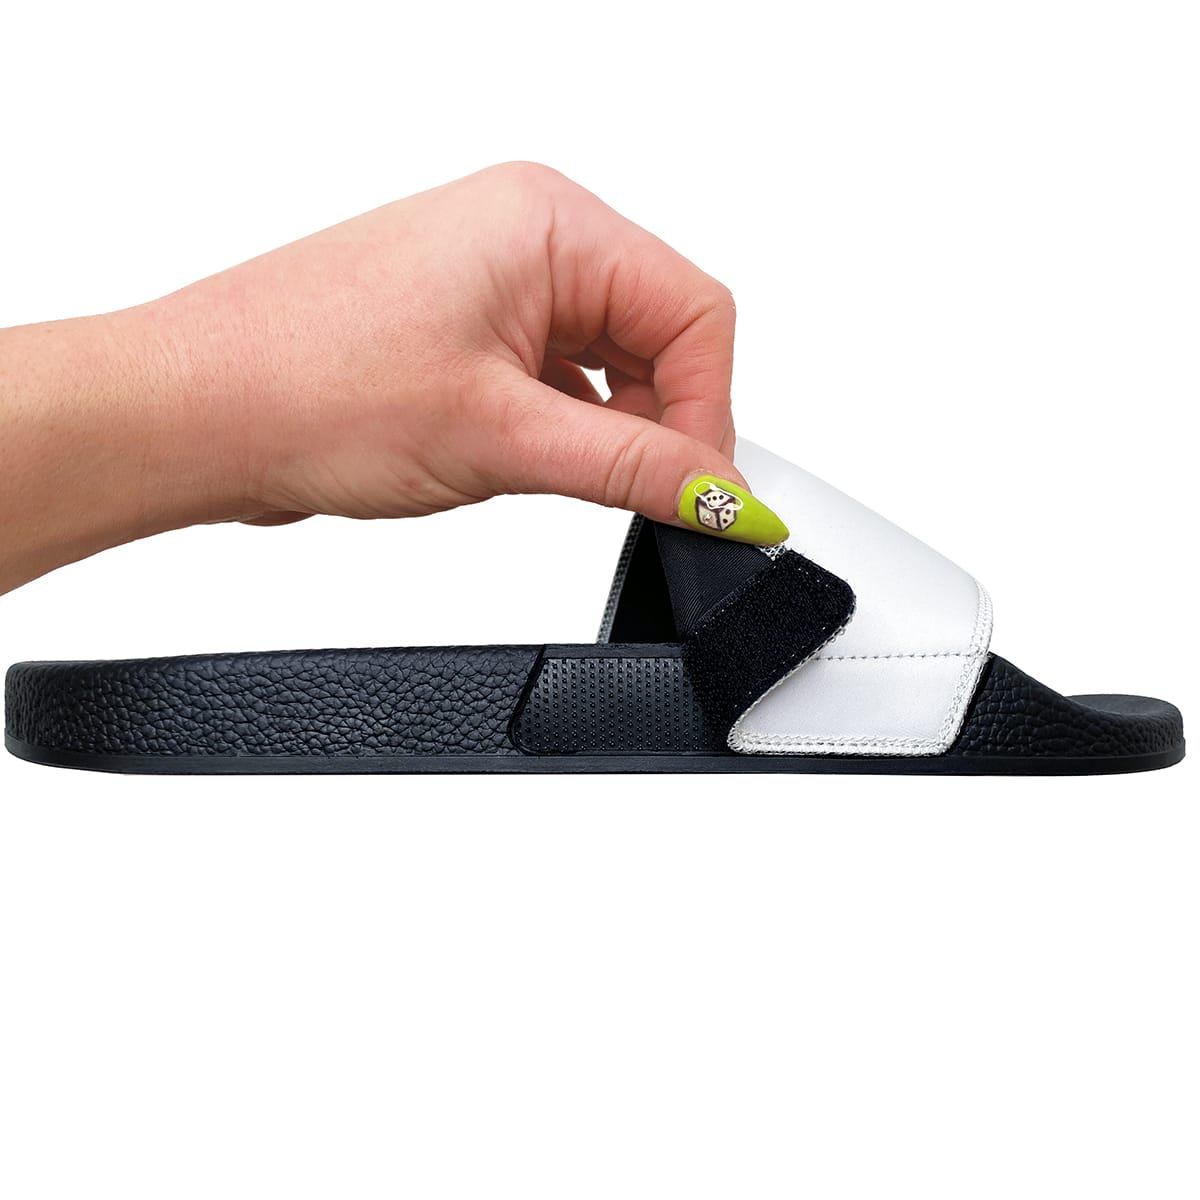 Deco Slides Online Customizer  Design Your Own Custom Slide Sandals